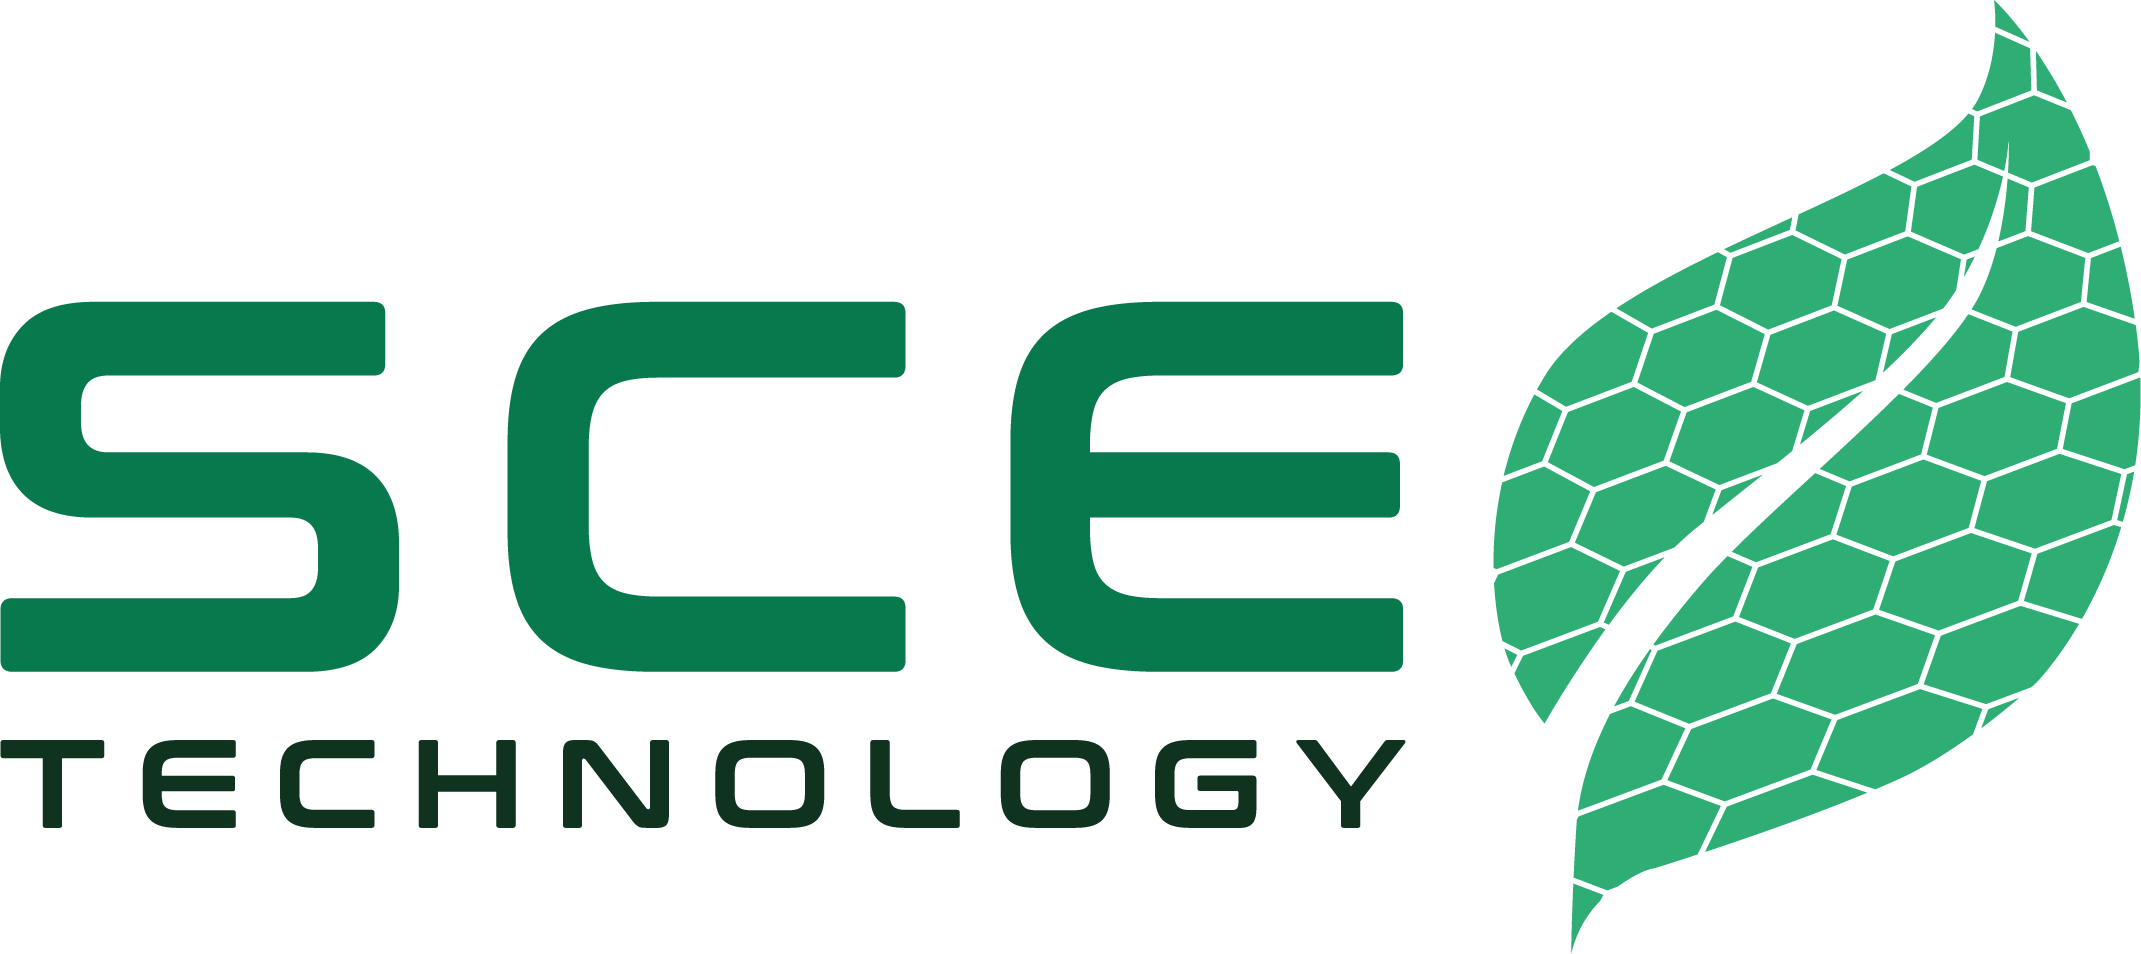 SCE logo fc